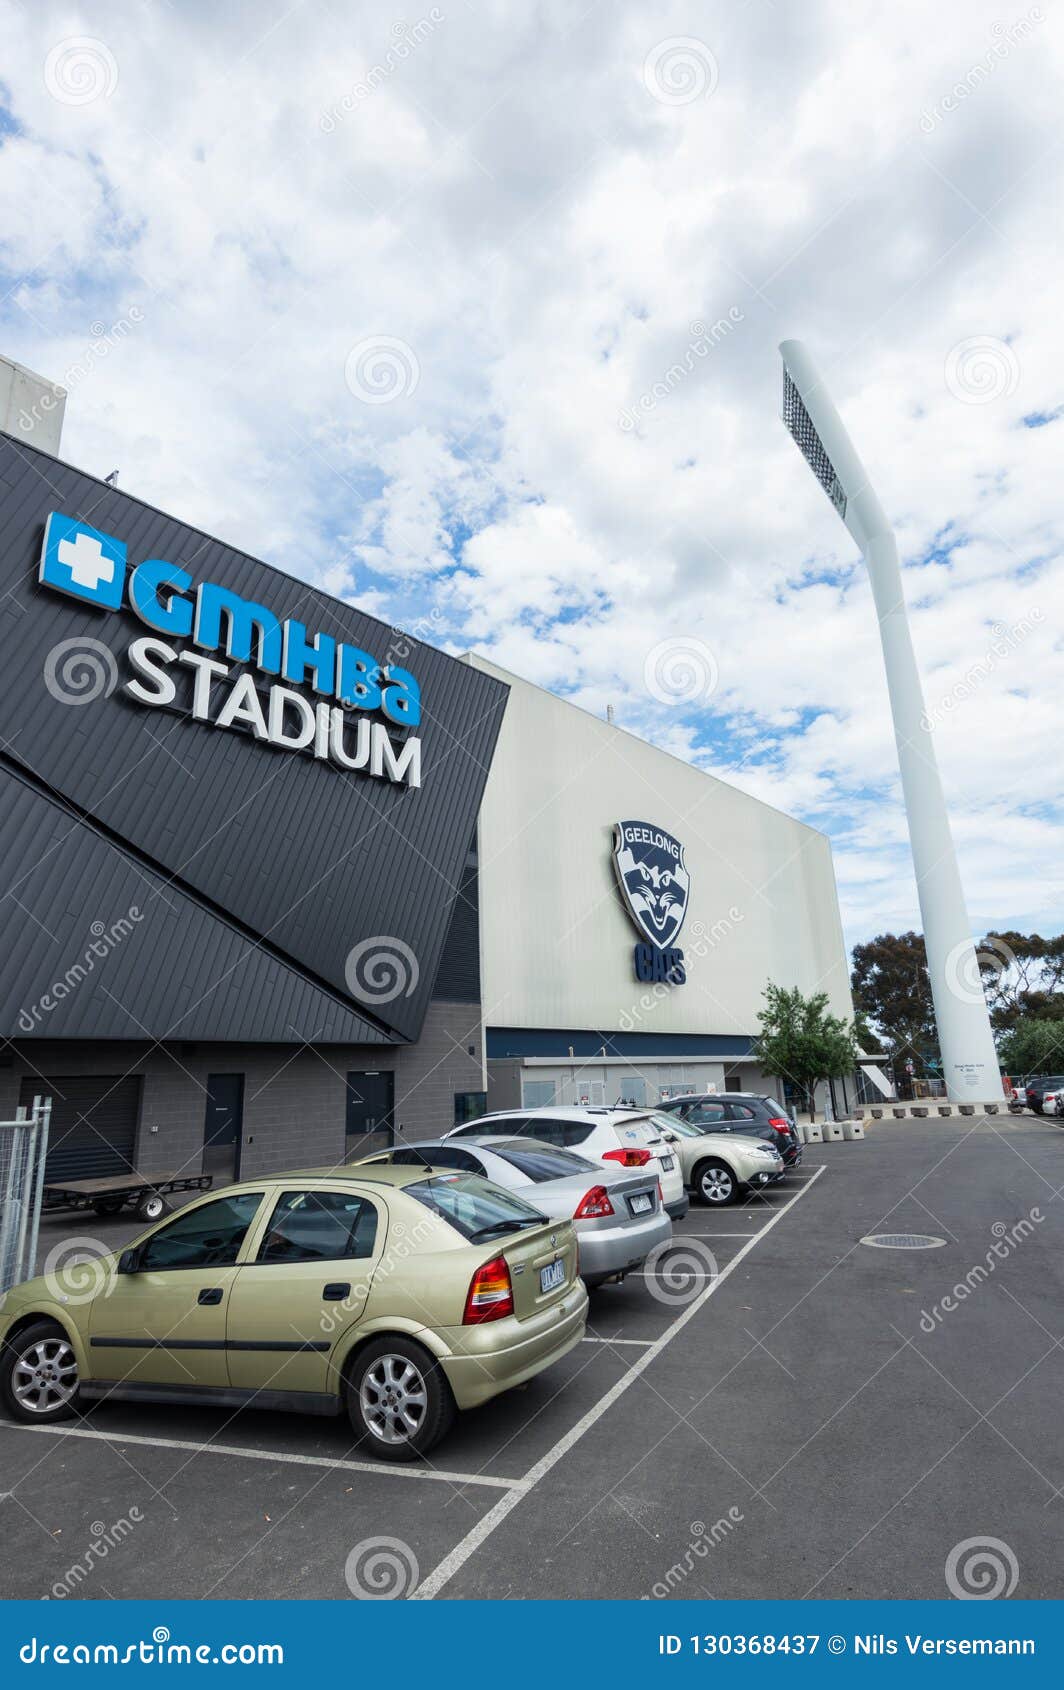 Geelong Football Club Home Ground GMHBA Stadium In Geelong ...